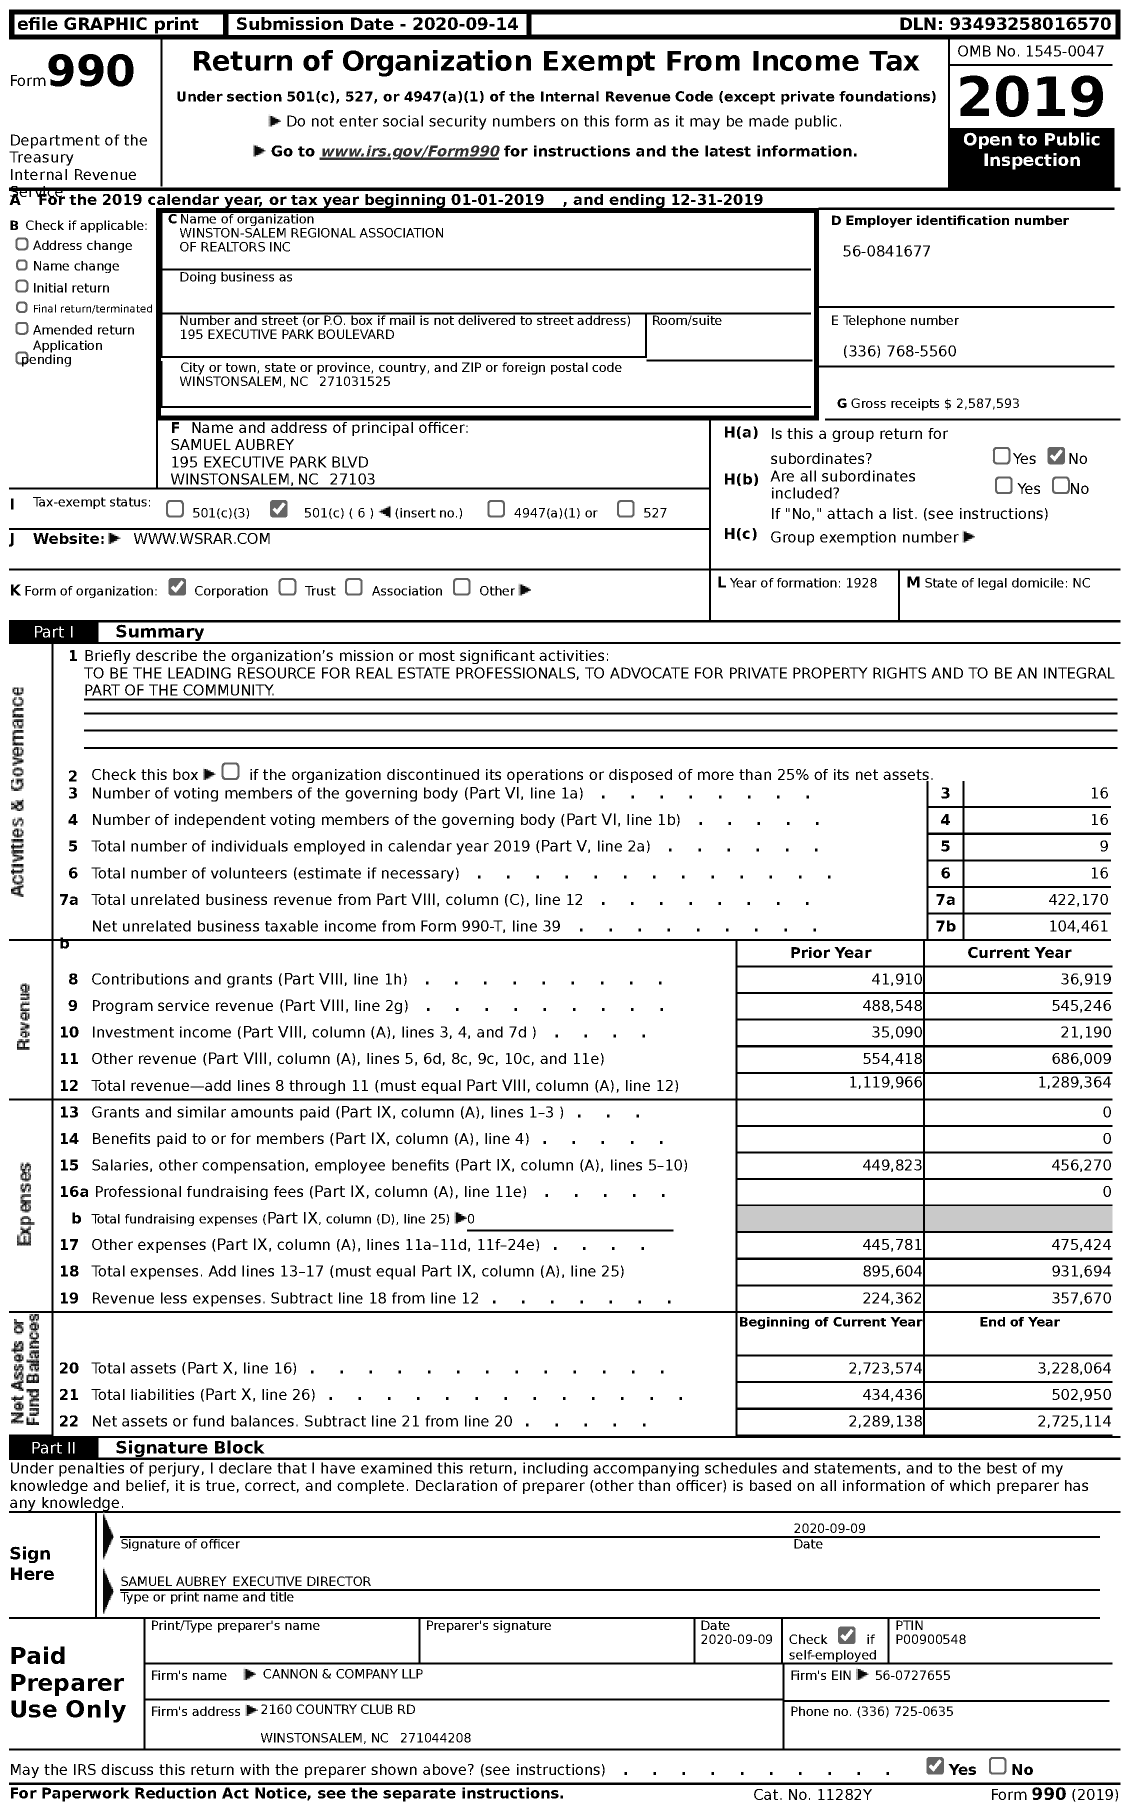 Image of first page of 2019 Form 990 for Winston-Salem Regional Association of Realtors